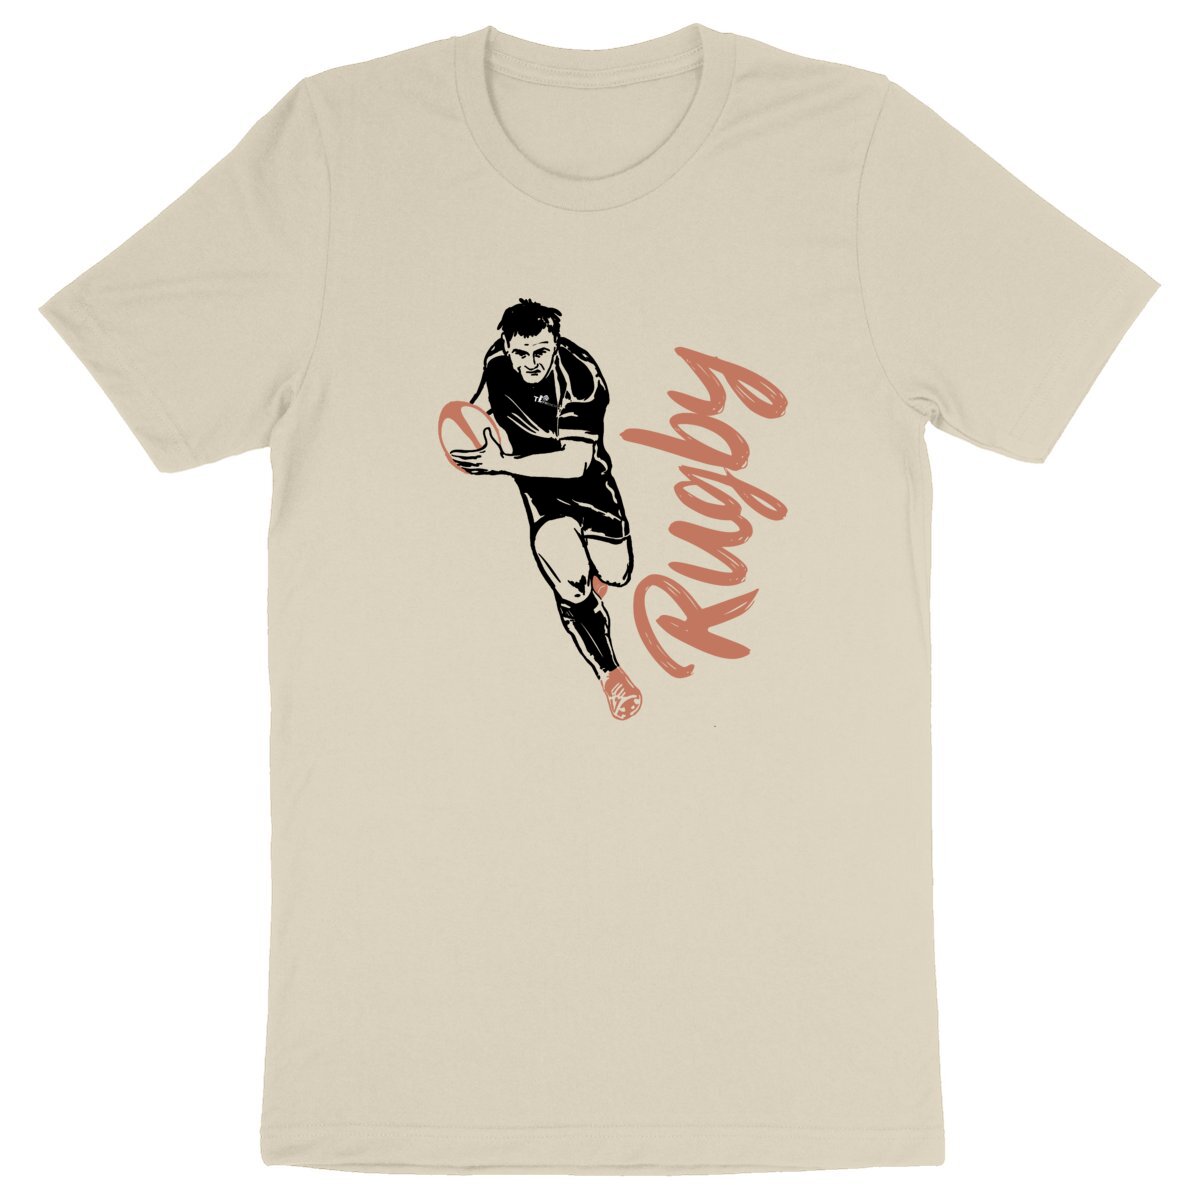 T-Shirt Homme Bio - Sport Rugby naturel, T-shirt en coton bio rugby sport de t-french, t-shirt sport rugby, t-shirt homme rugby, t-shirt de rugby, t-shirt coupe du monde de rugby, tee shirt ballon rond, t-shirt ballon rond, t-shirt en coton bio rugby